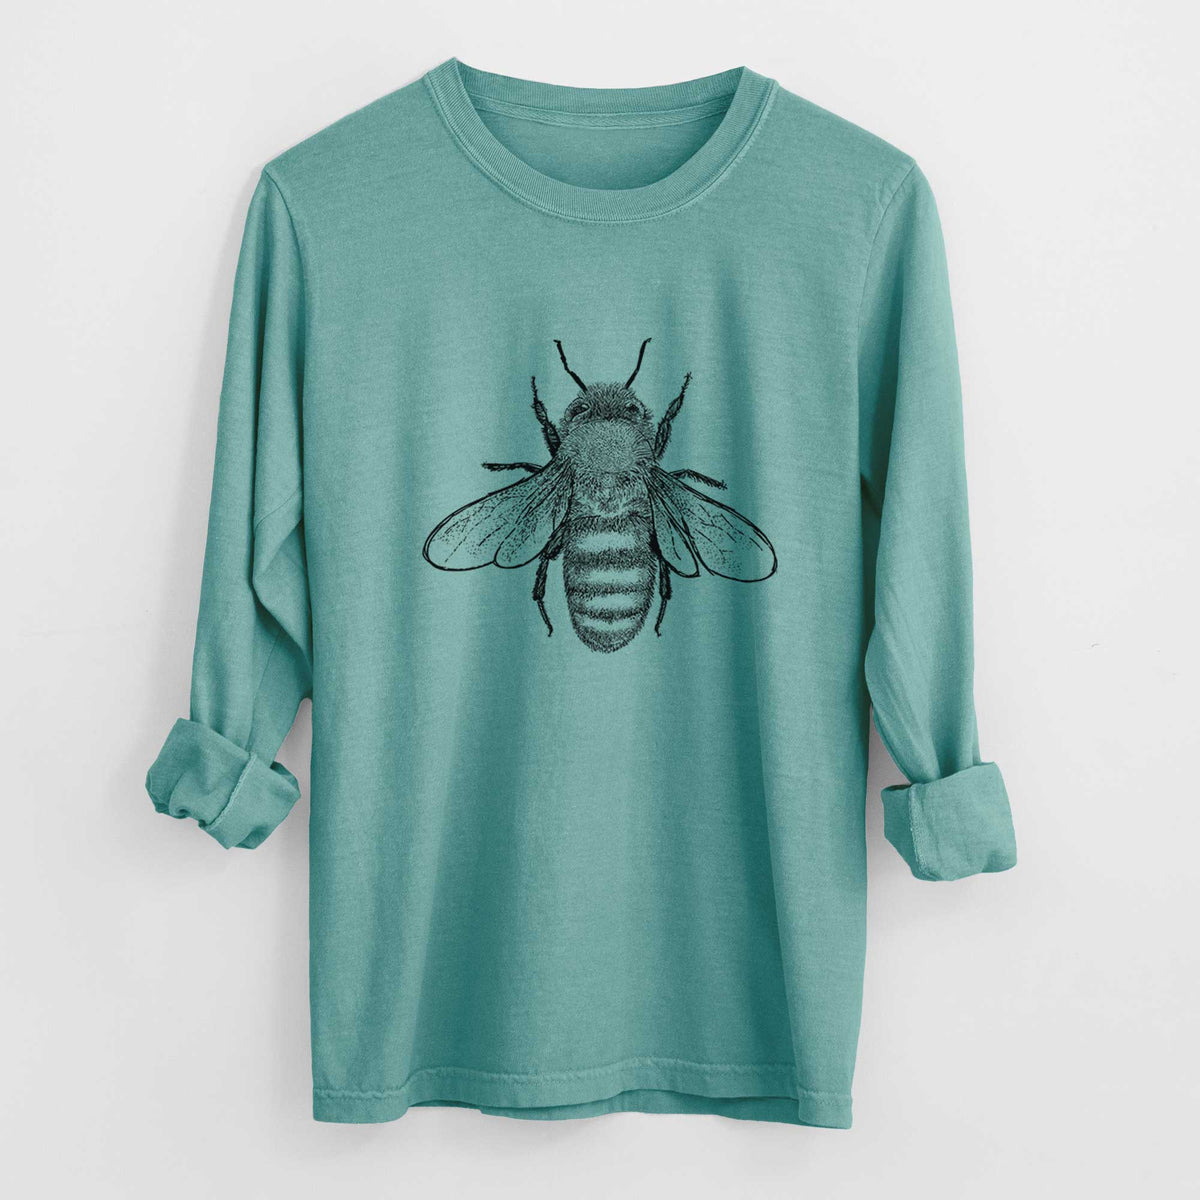 Apis Mellifera - Honey Bee - Heavyweight 100% Cotton Long Sleeve